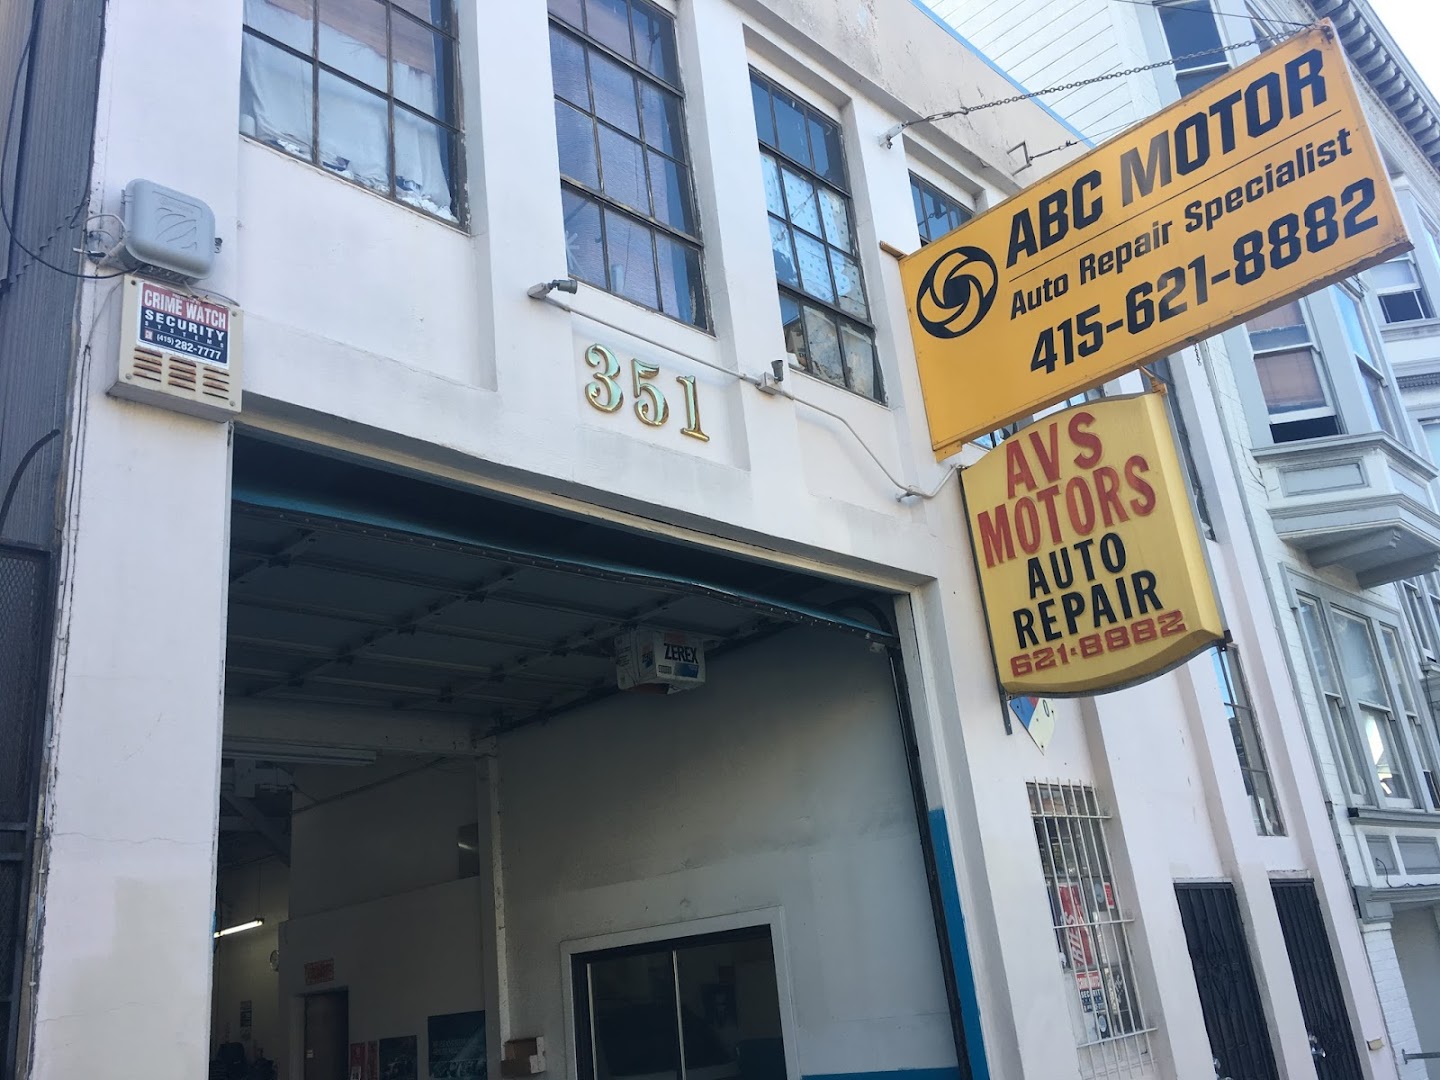 Auto repair shop In San Francisco CA 